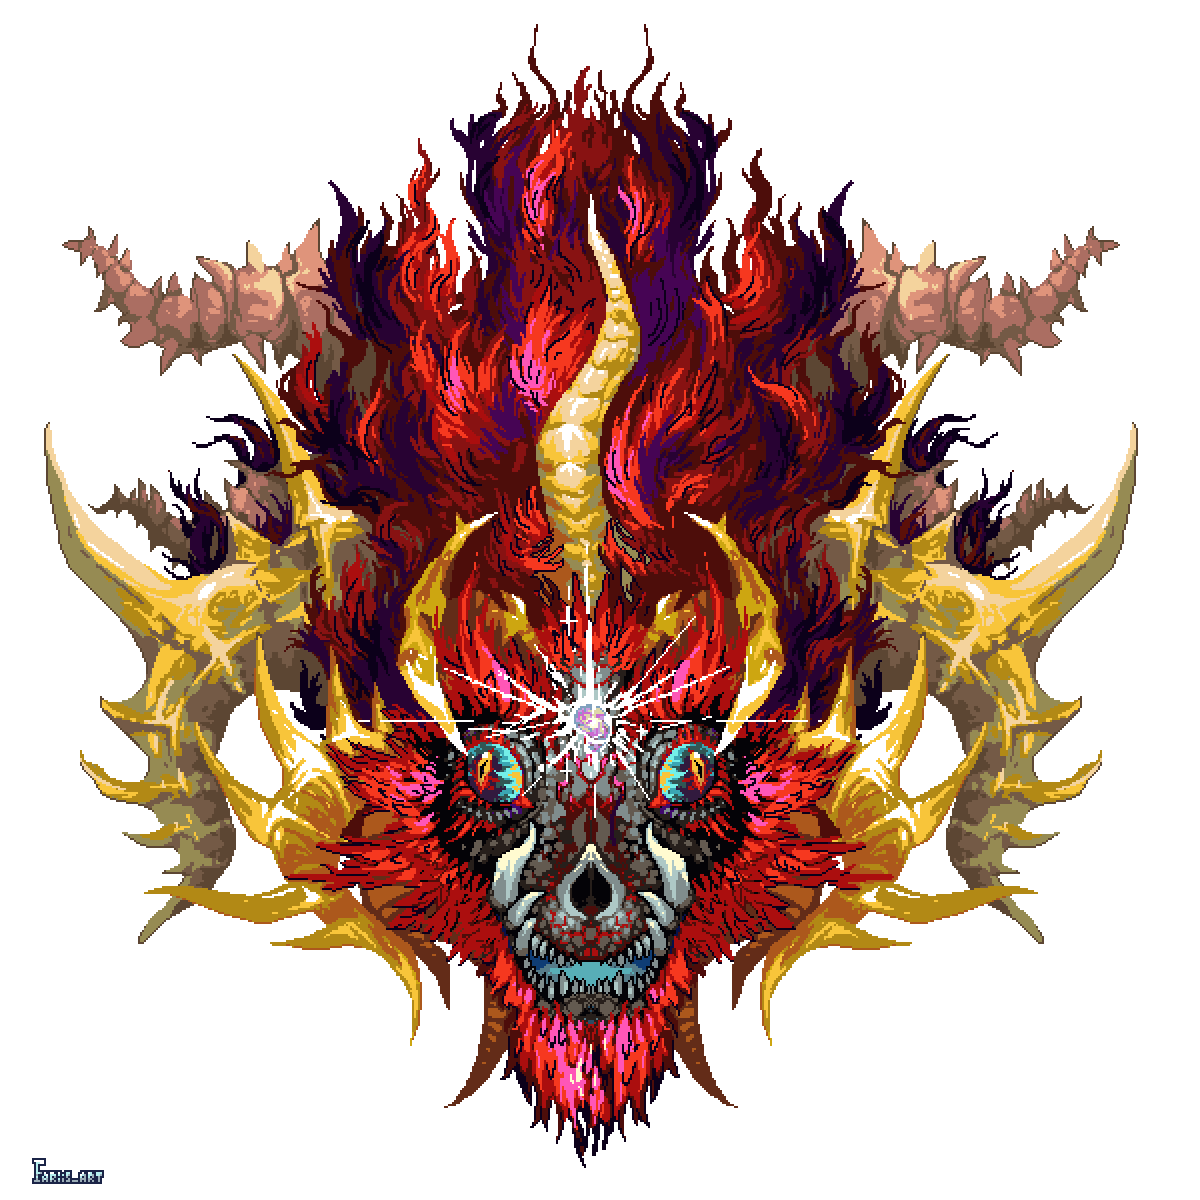 Ganondorf the Demon Dragon by FariisArt on DeviantArt